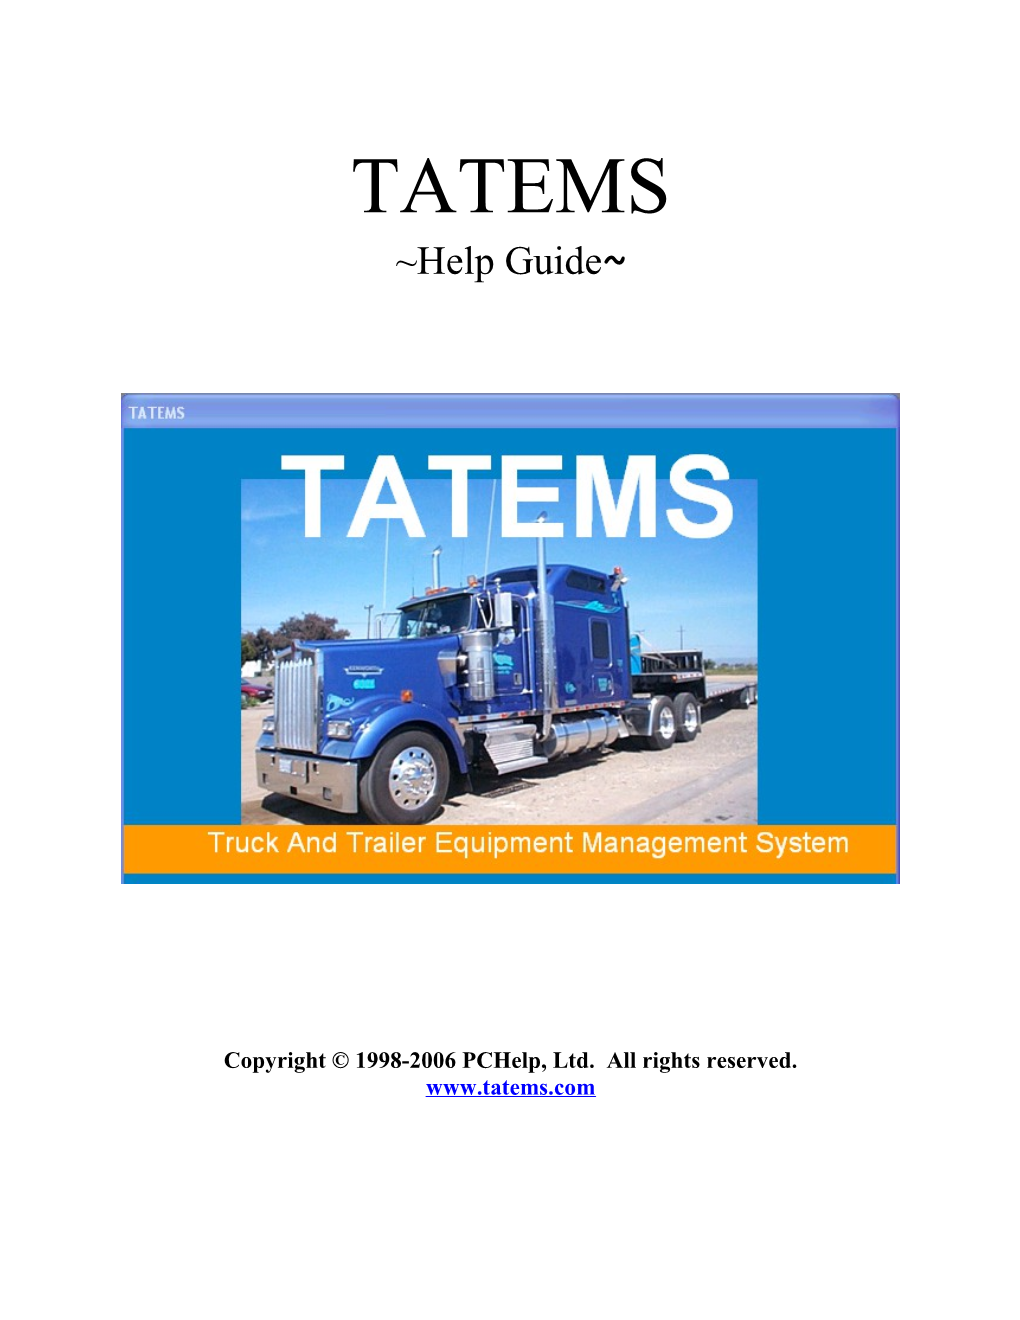 TATEMS New Help Guide